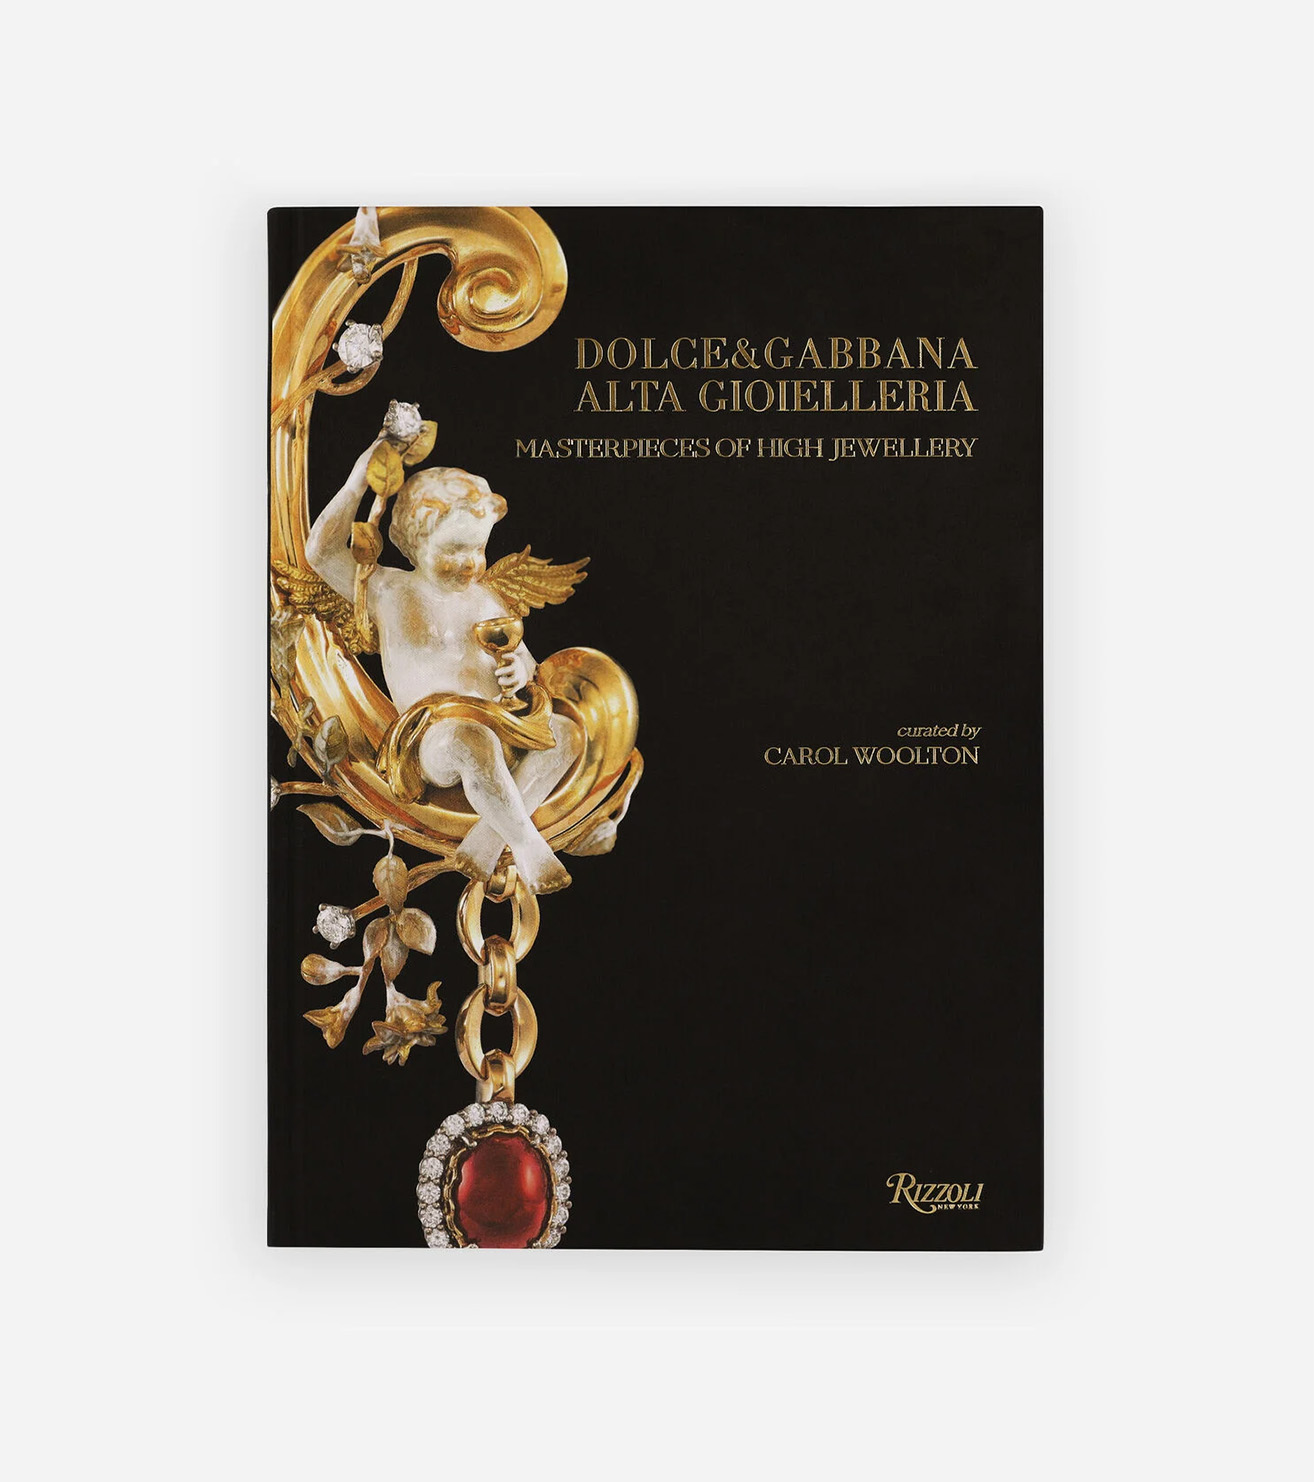 Dolce&Gabbana Alta Gioielleria 高级珠宝系列：至美杰作